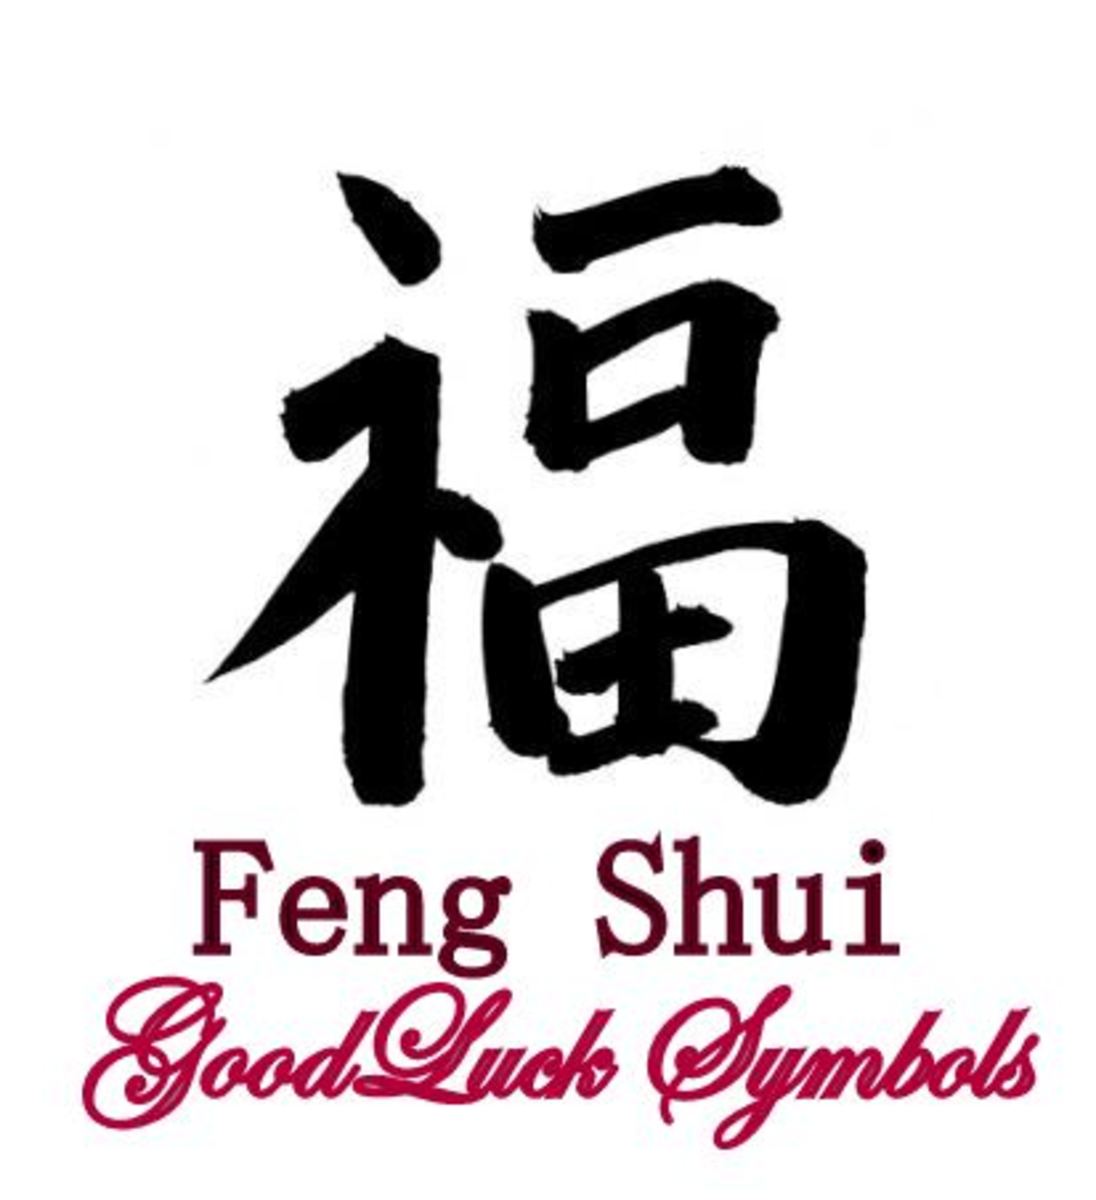 Feng Shui Good Luck Symbols